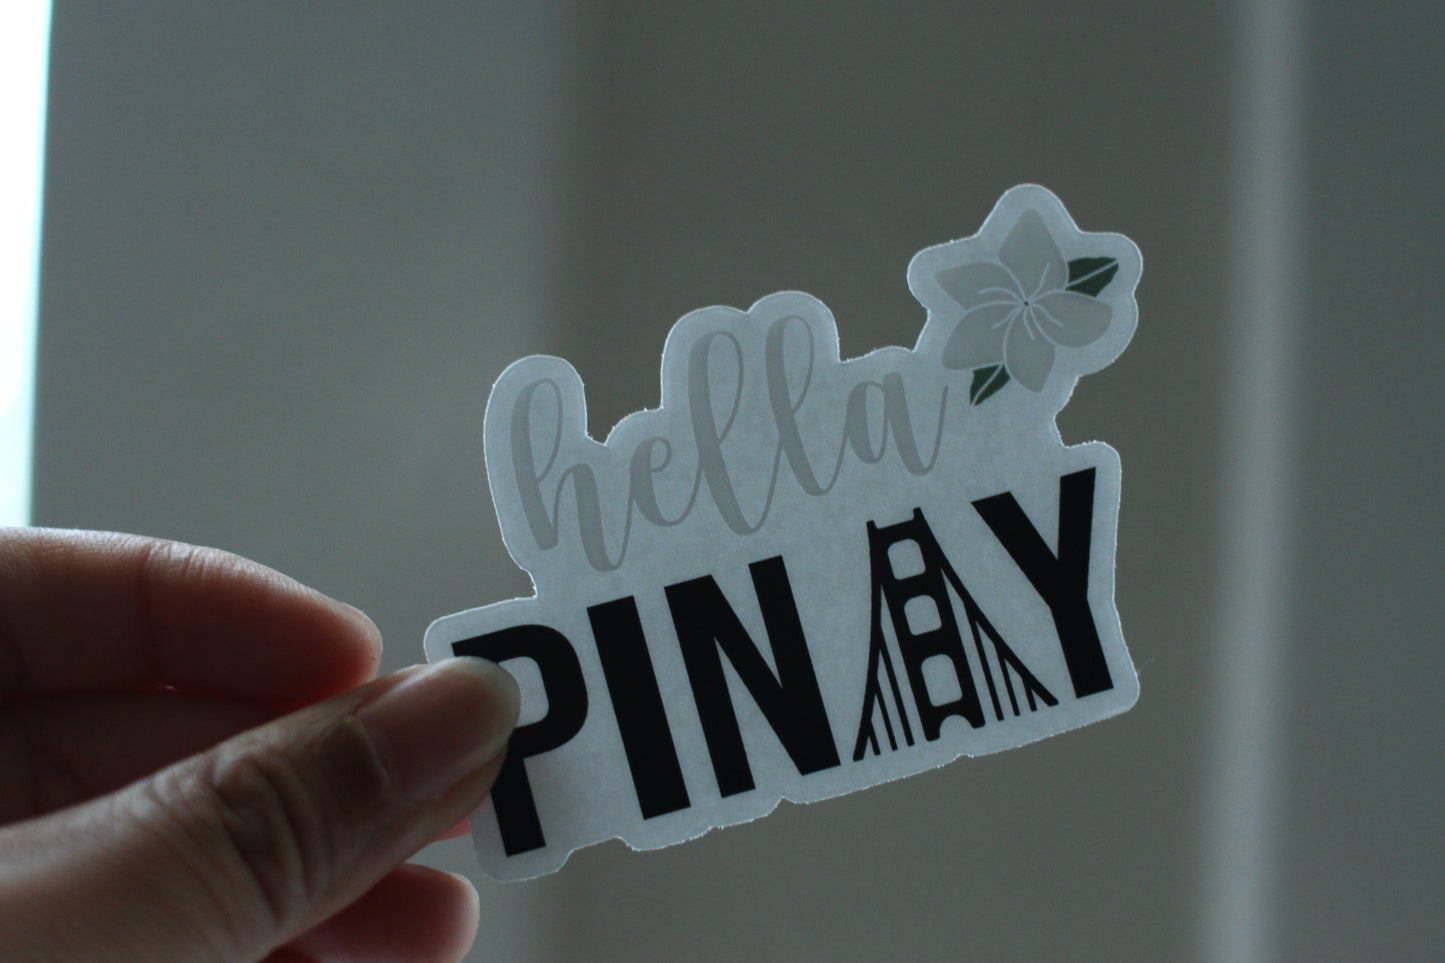 Hella Pinay Clear Sticker